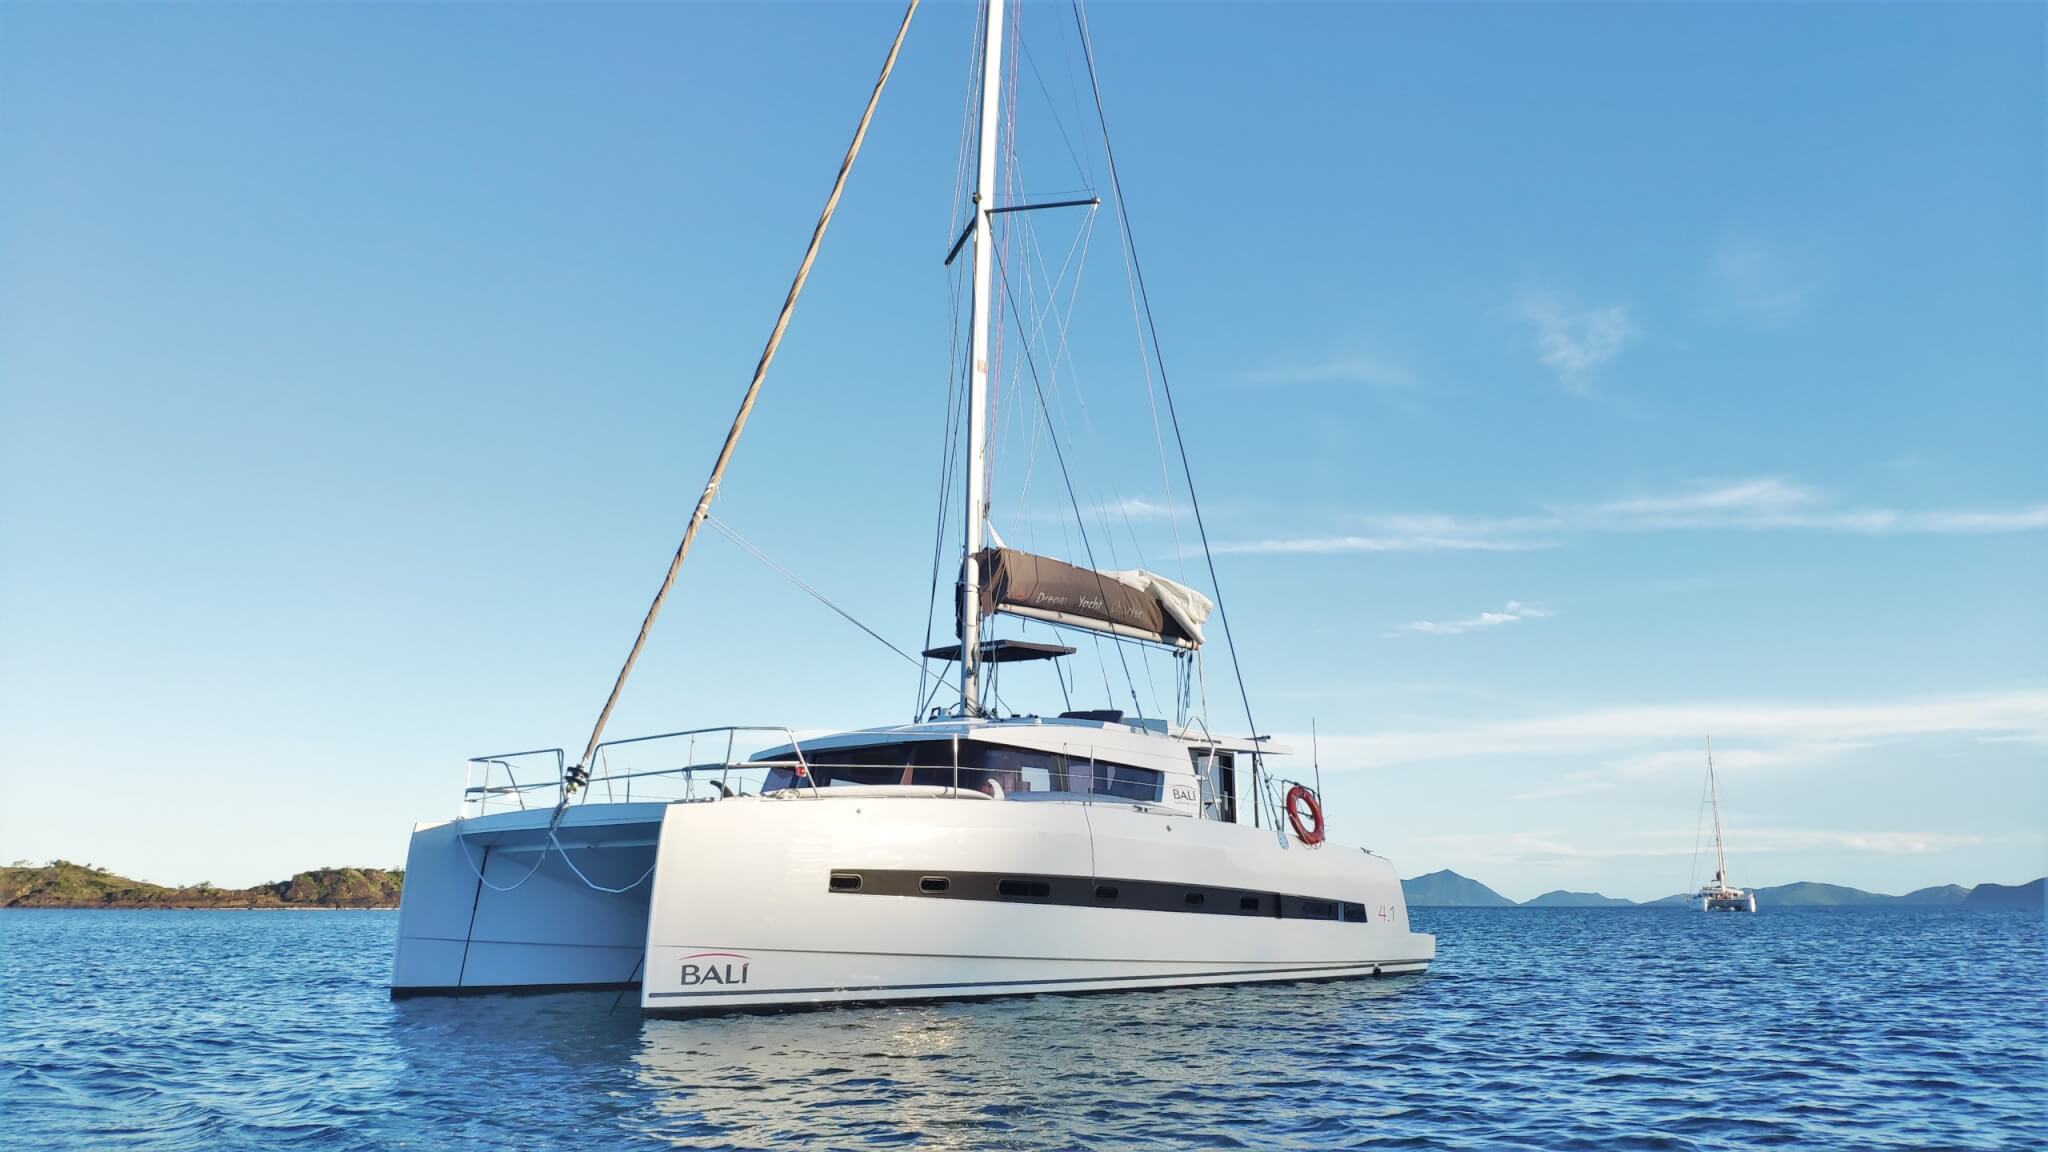 Catana Bali 4.1 Review - bareboating in the tropics on SV 'Namaste